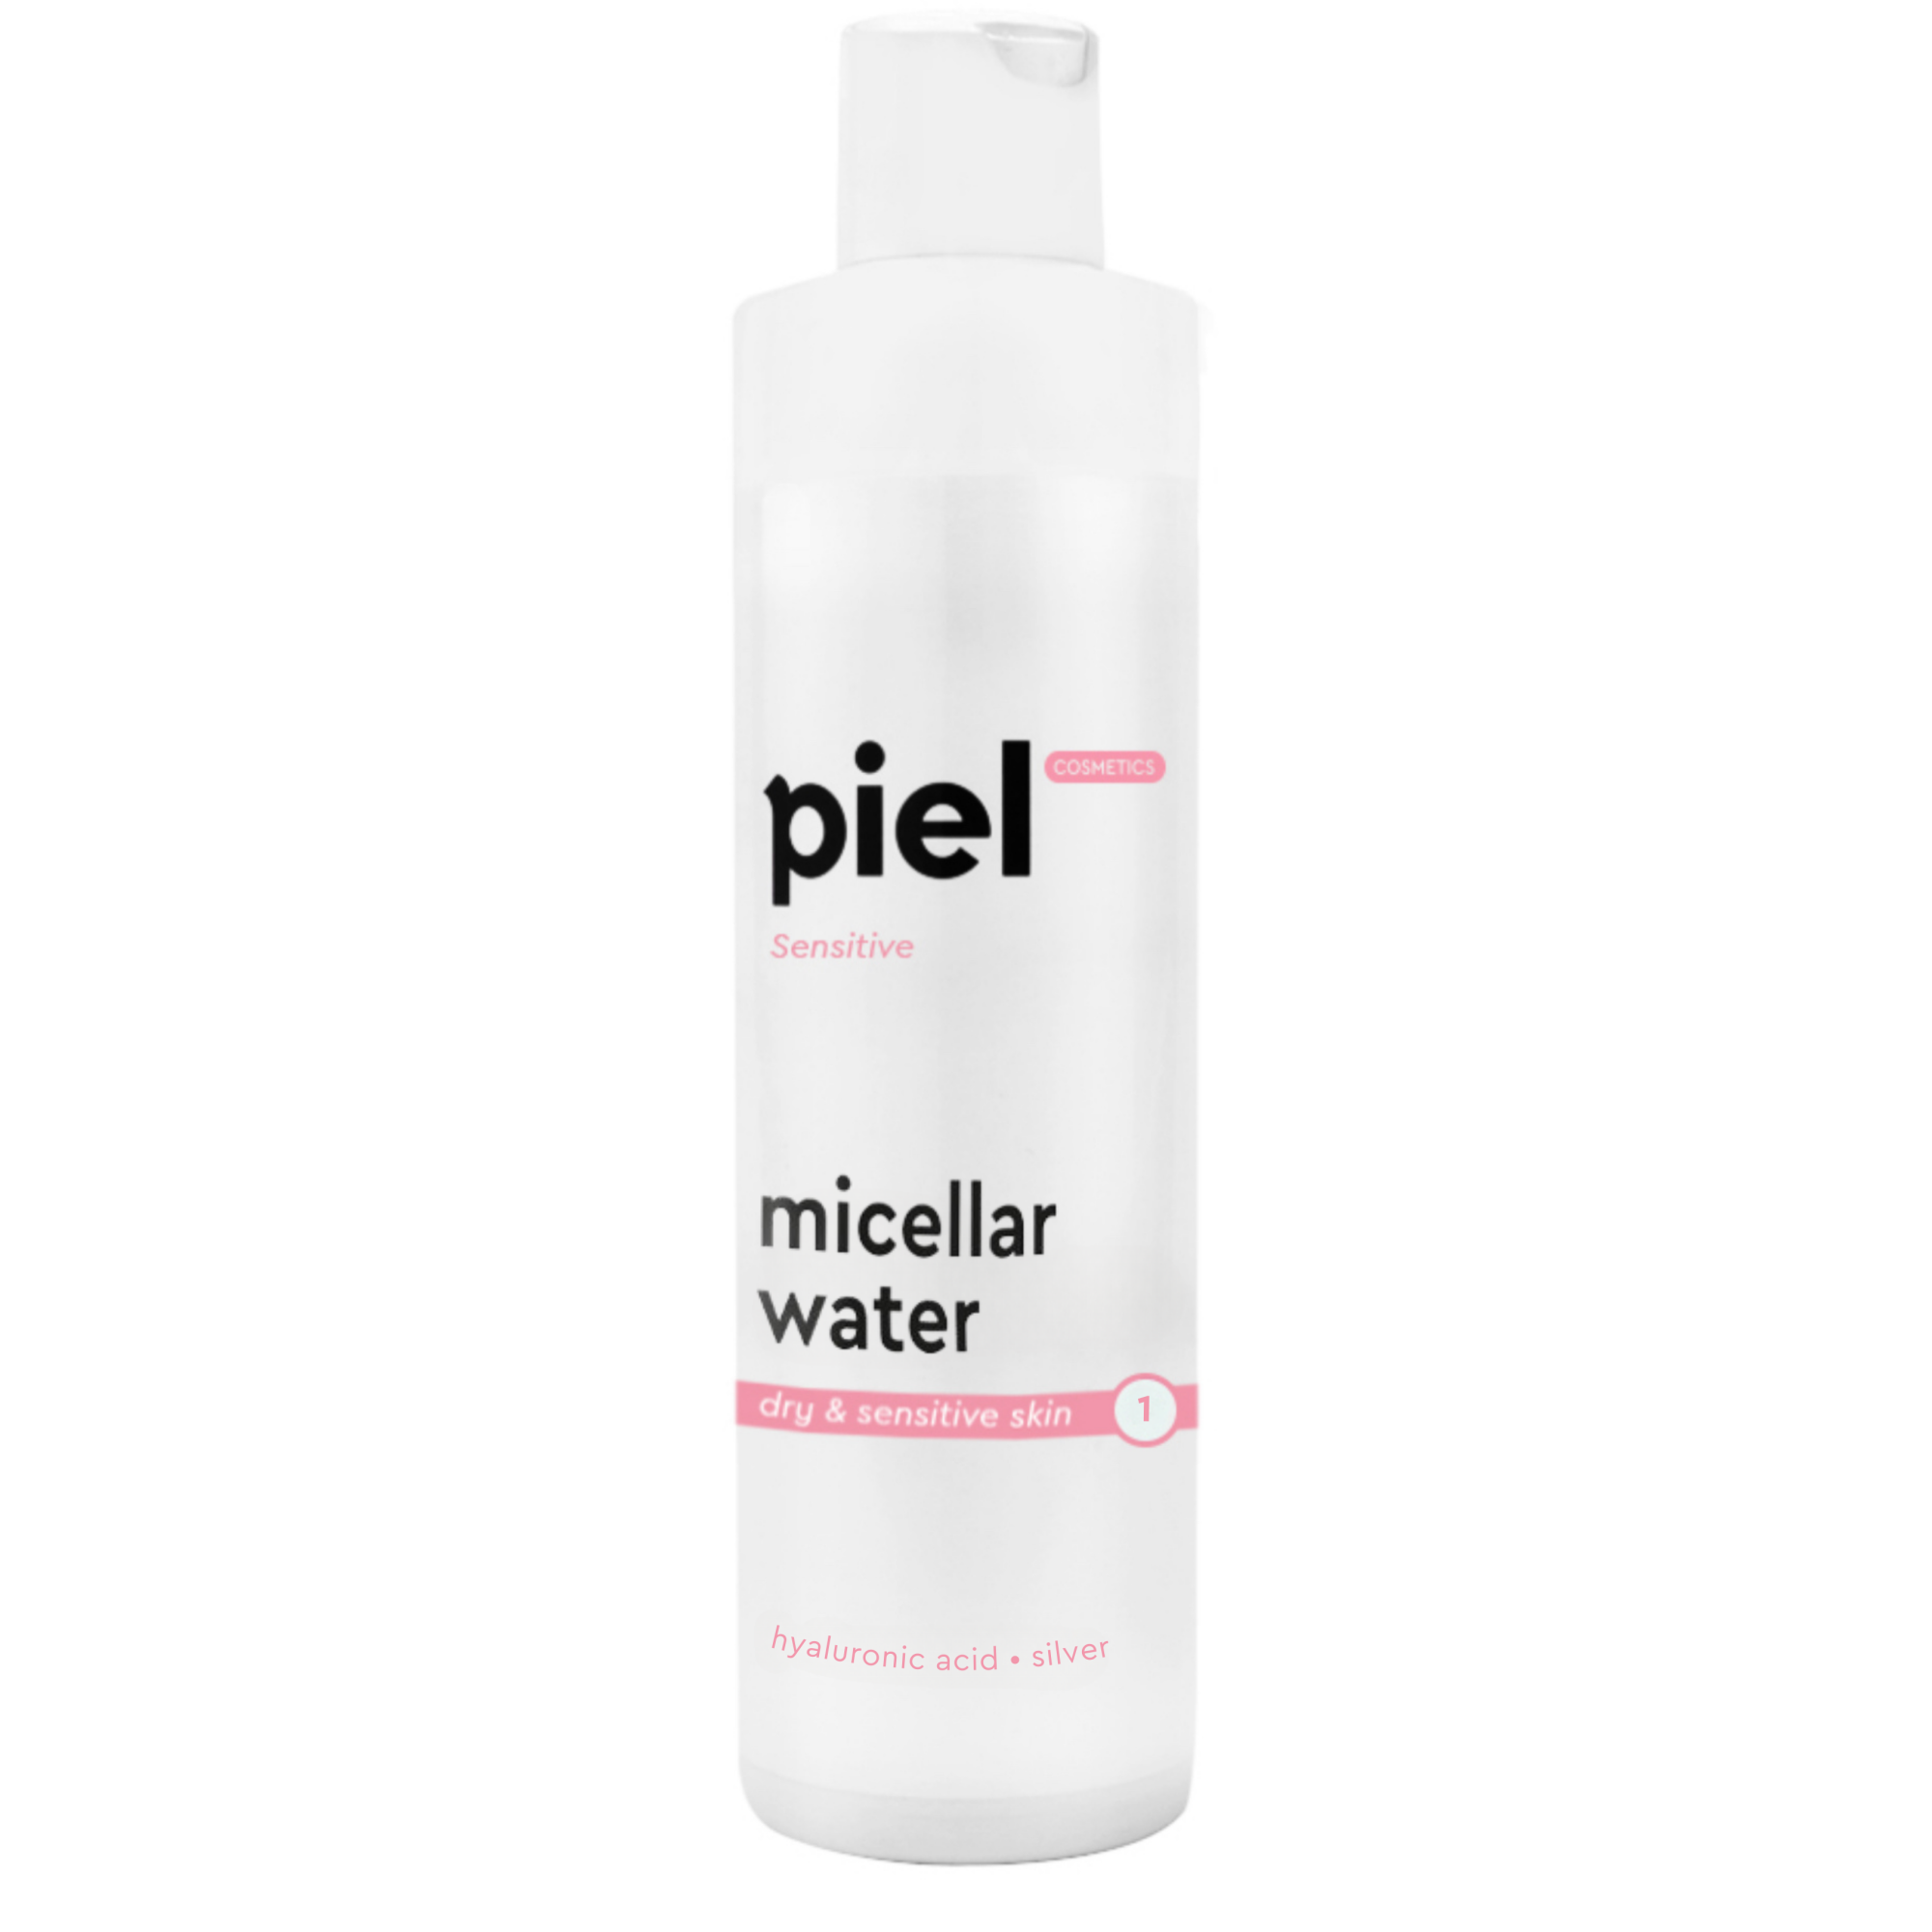 Micellar Water Makeup removing and cleansing micellar water